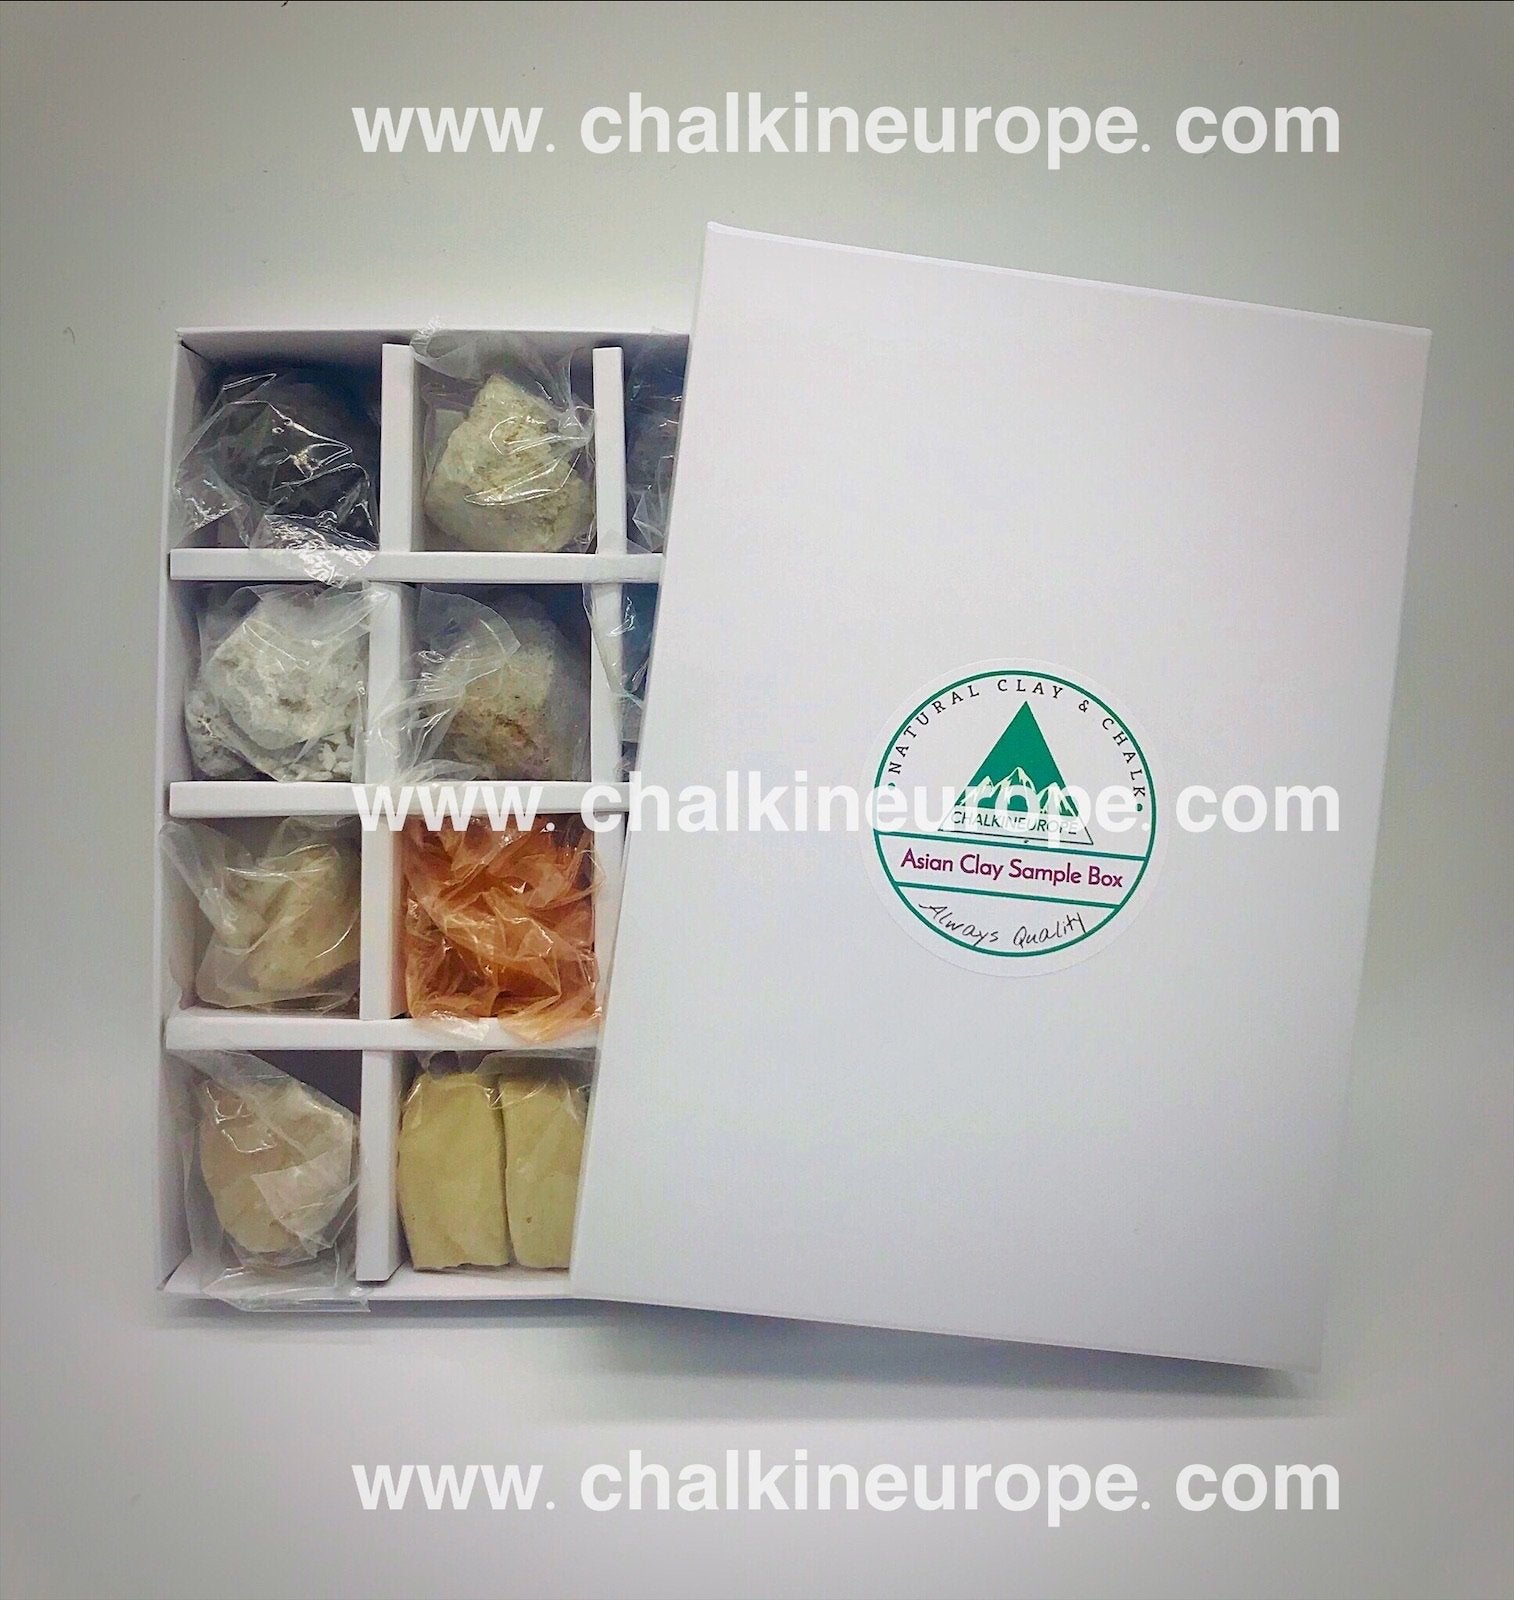 Edible clay samples - Chalkineurope